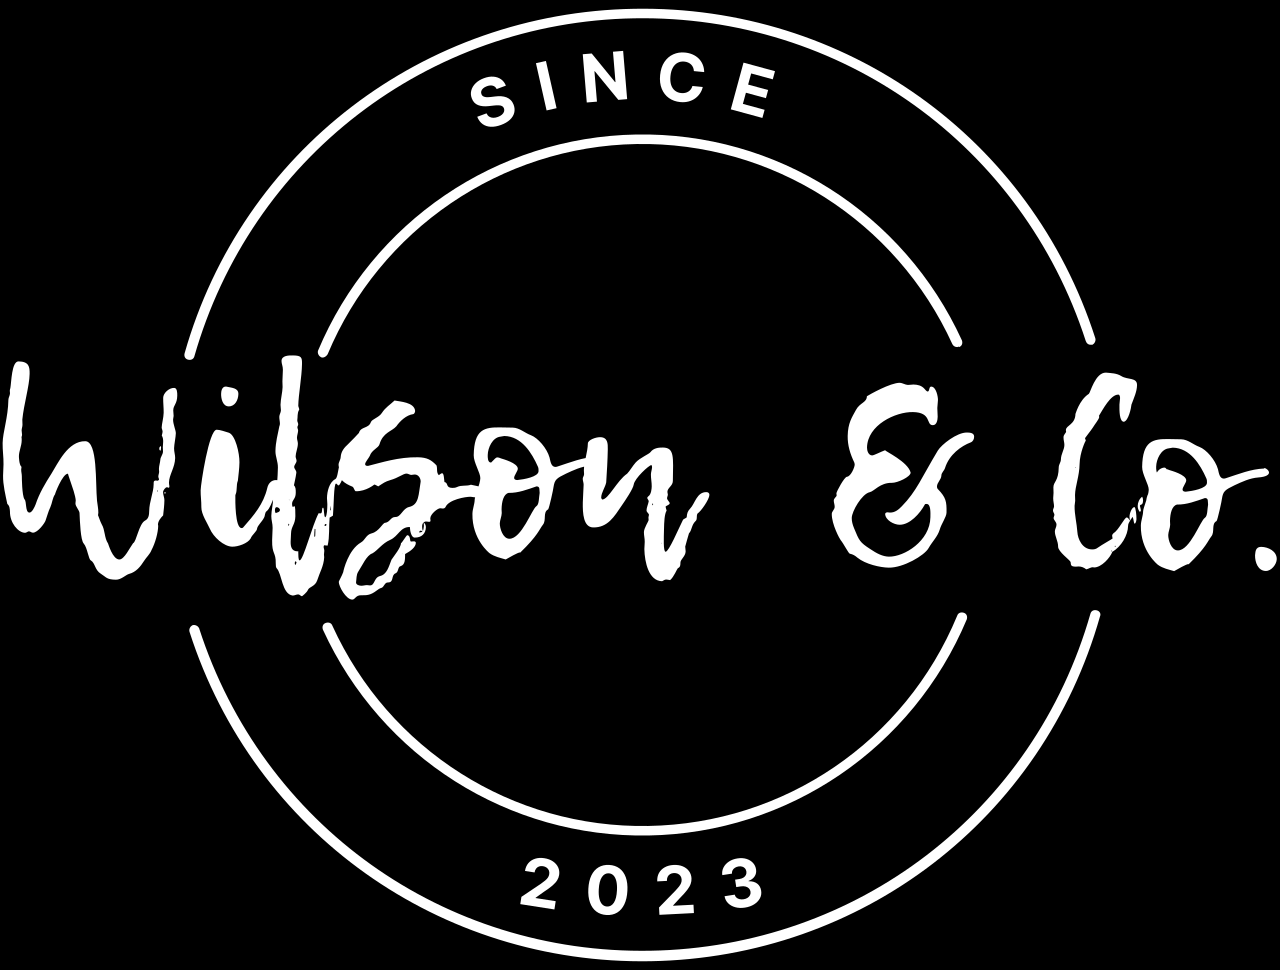 Wilson  & Co.'s logo